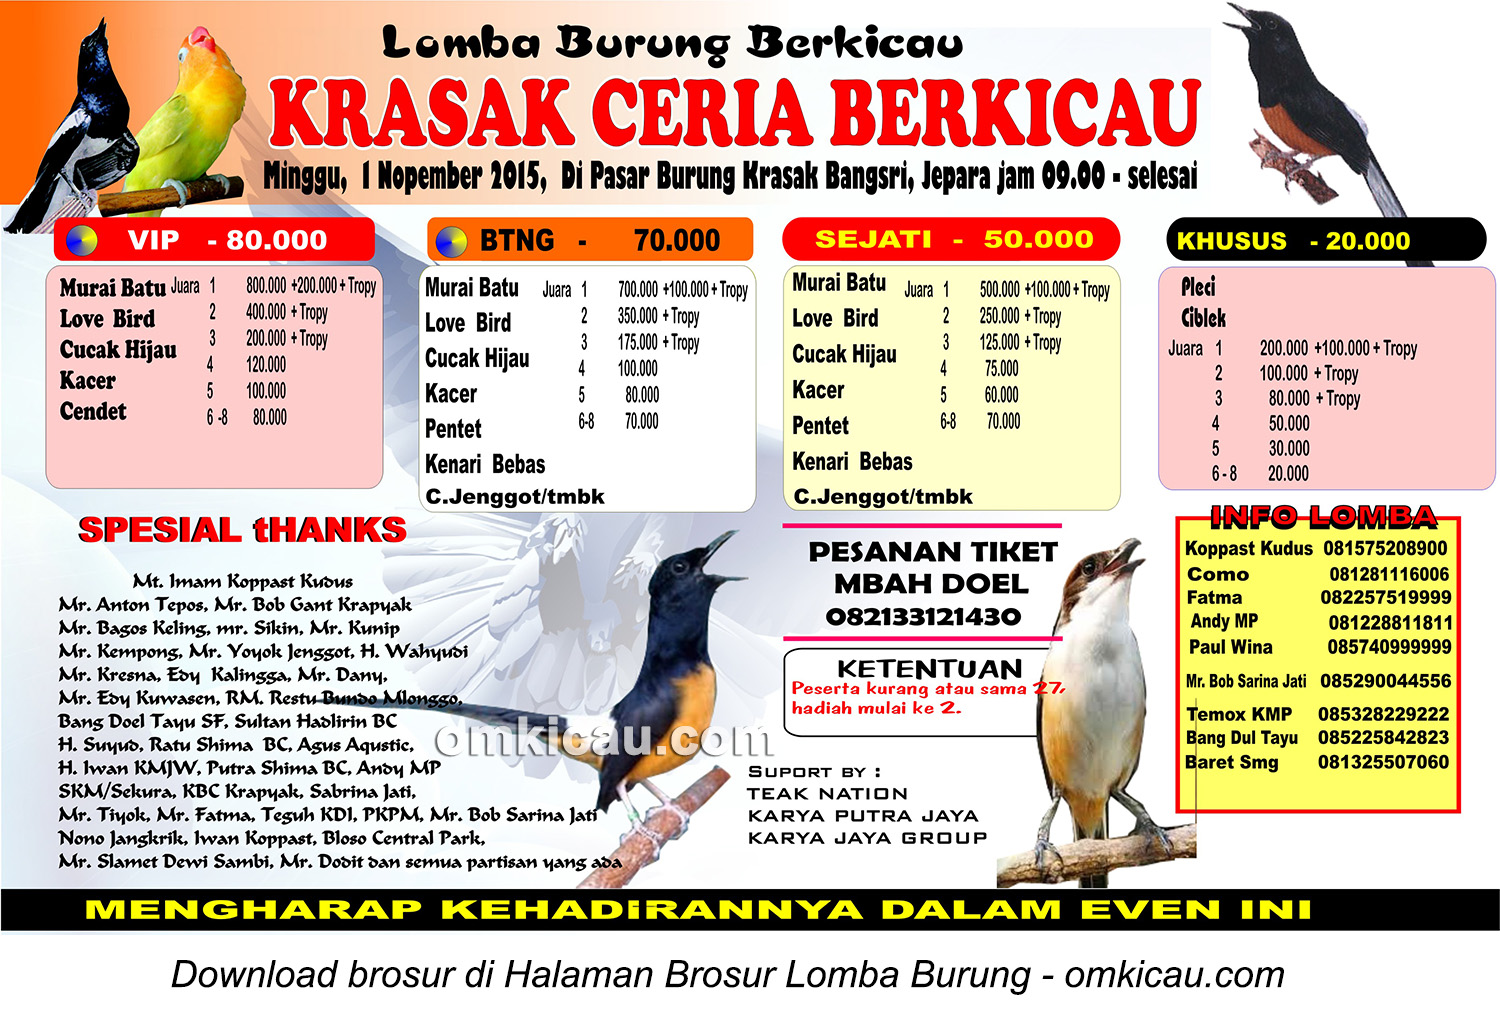 Brosur Lomba Burung Krasak Ceria Berkicau, Jepara,1 November 2015